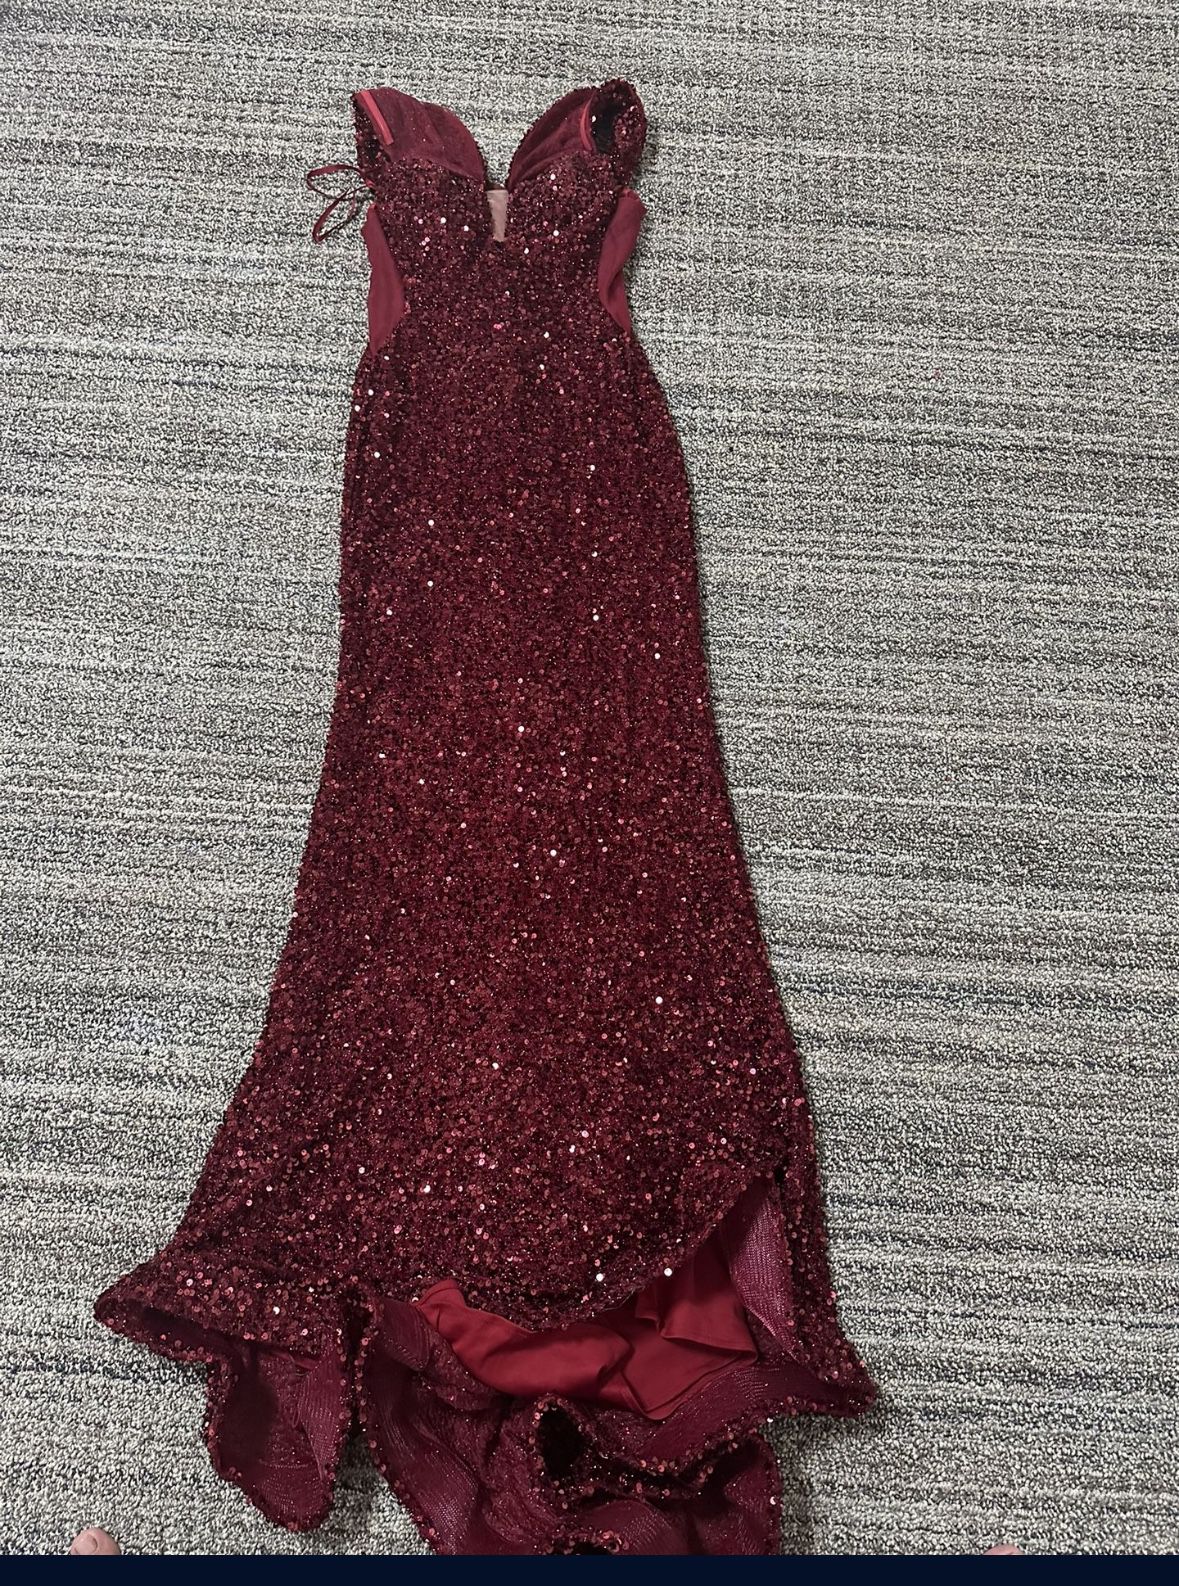 Prom Dress Size 8 